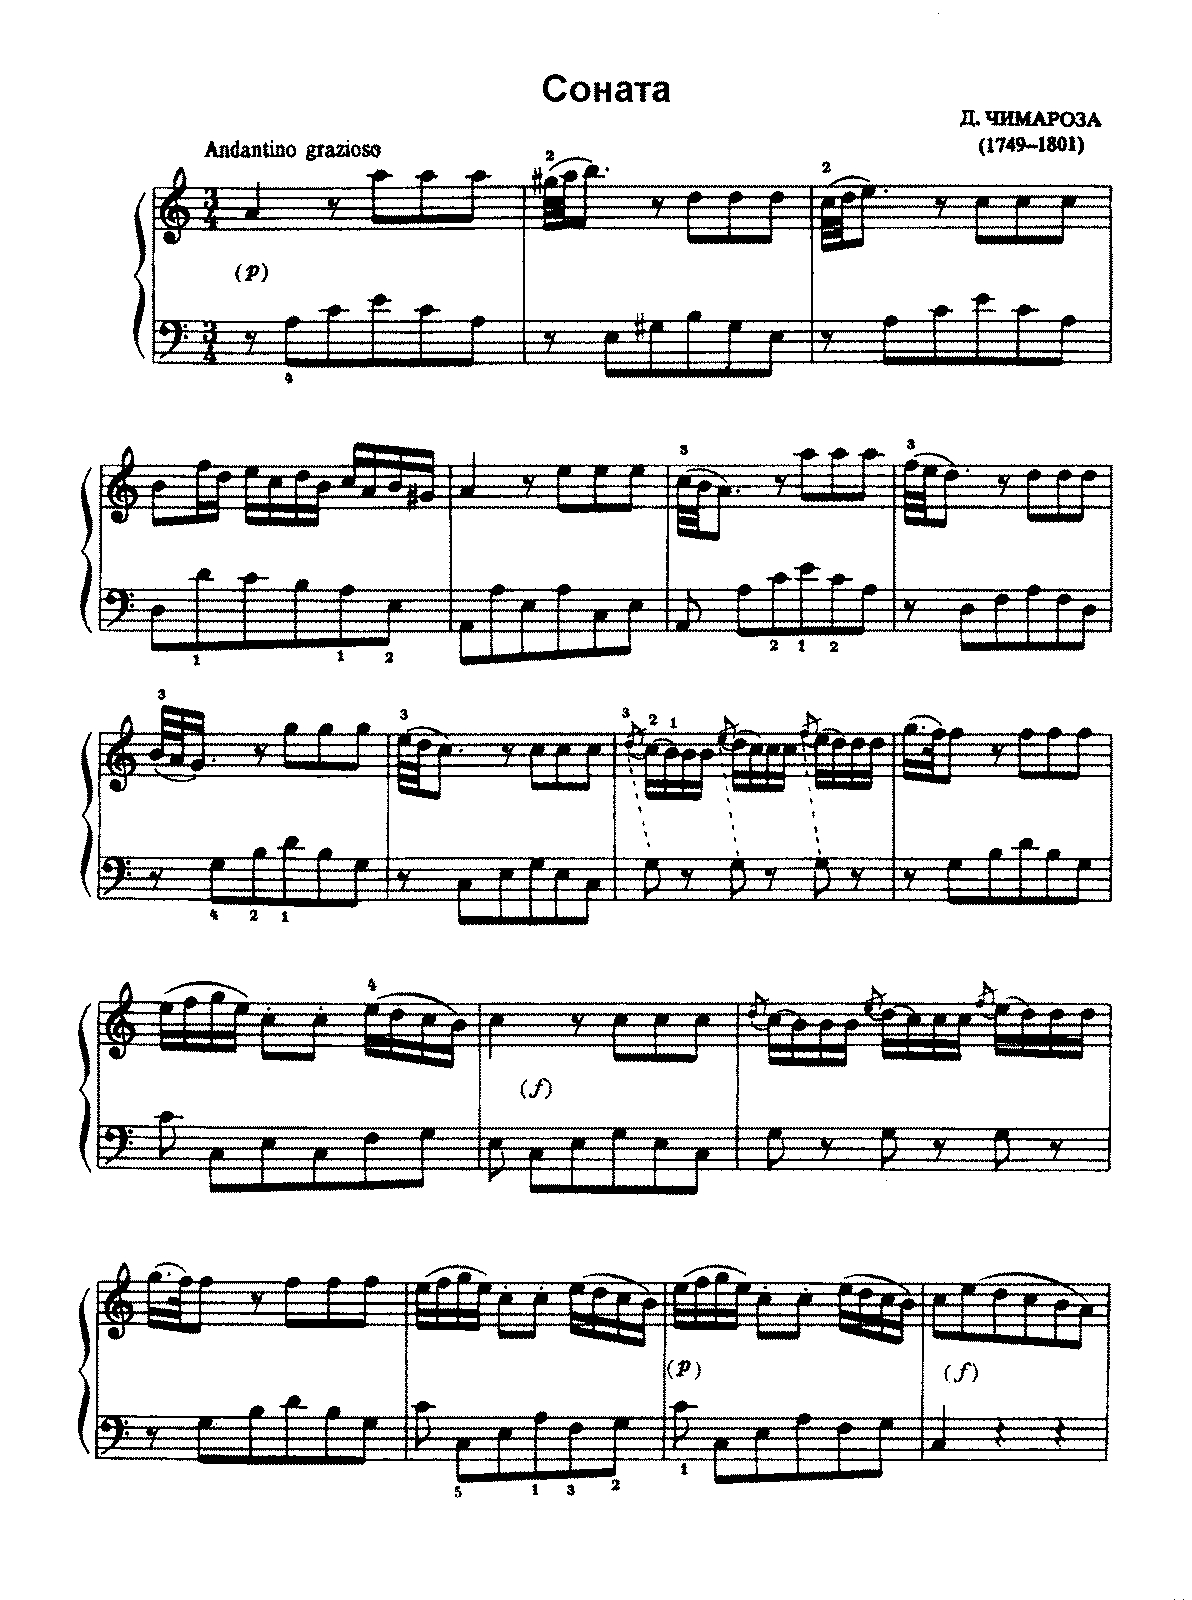 Keyboard Sonatas (Cimarosa, Domenico) - IMSLP